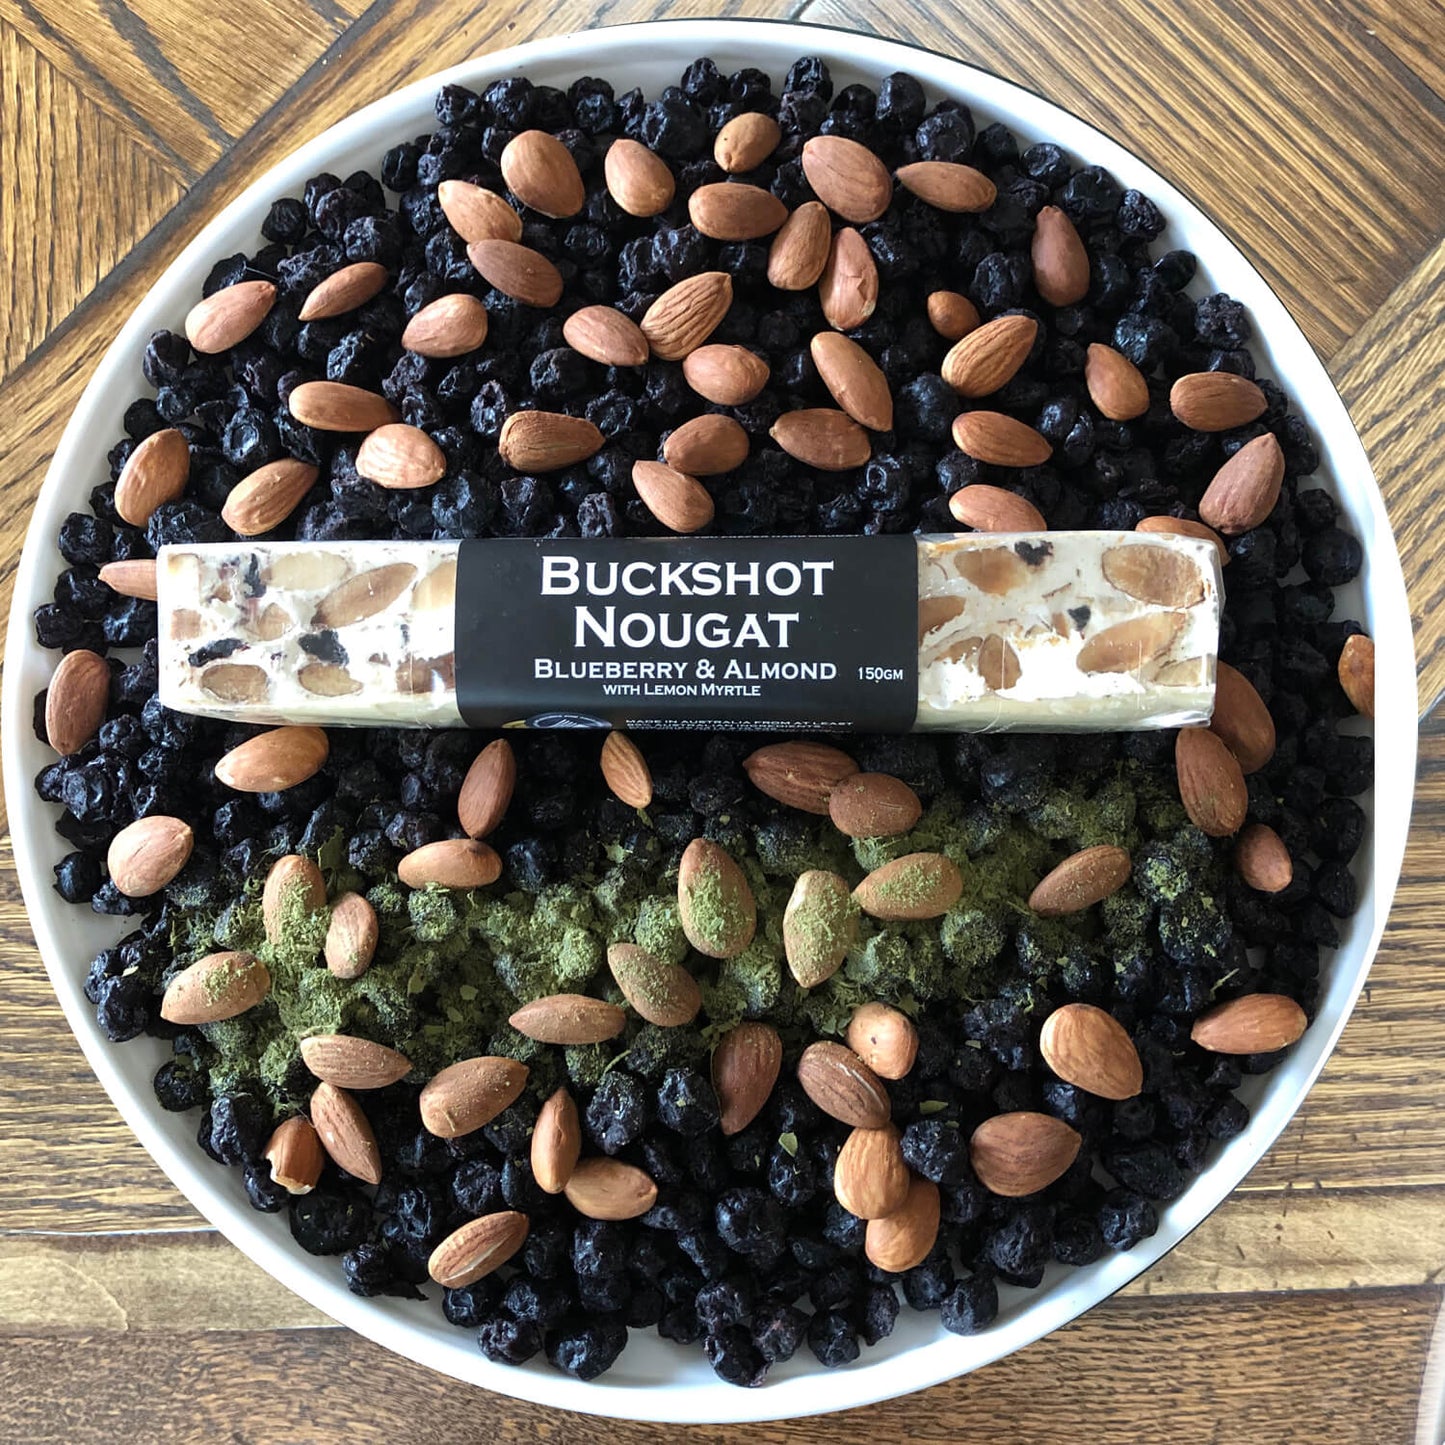 Buckshot Nougat Blueberry & Almond with Lemon Myrtle